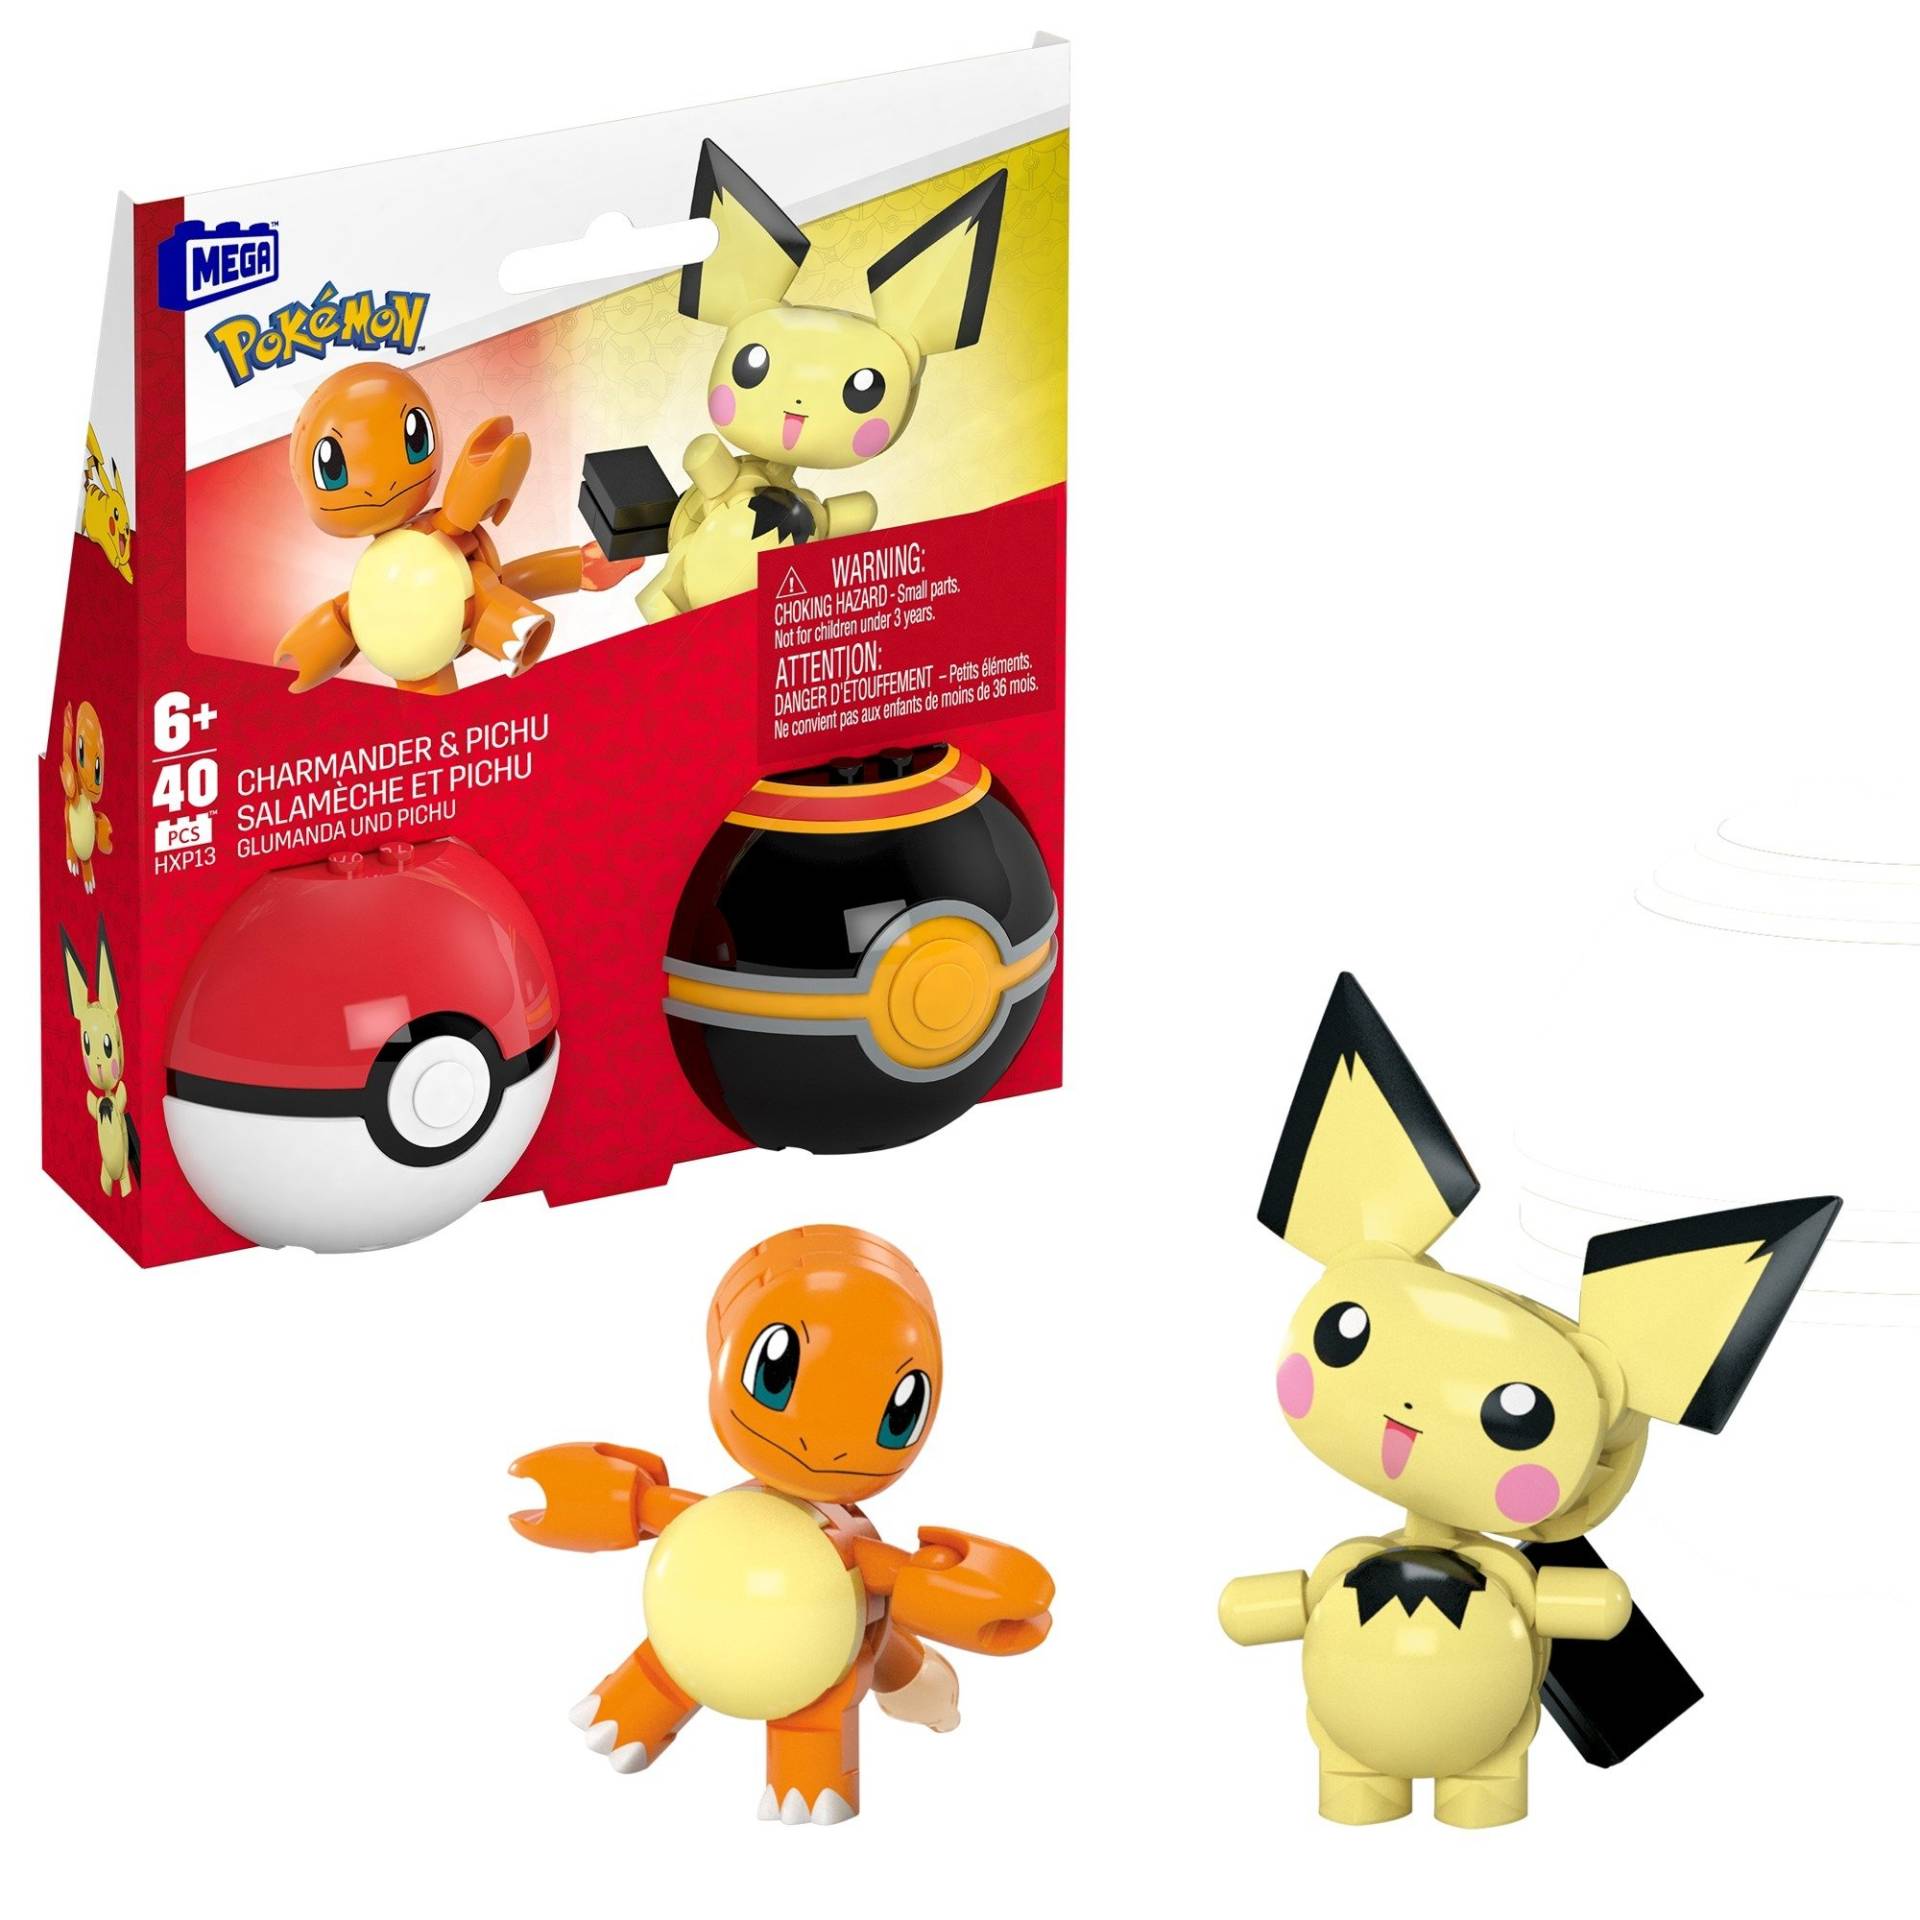 MEGA Pokémon Poké Ball - Charmander und Pichu, Konstruktionsspielzeug von Mattel